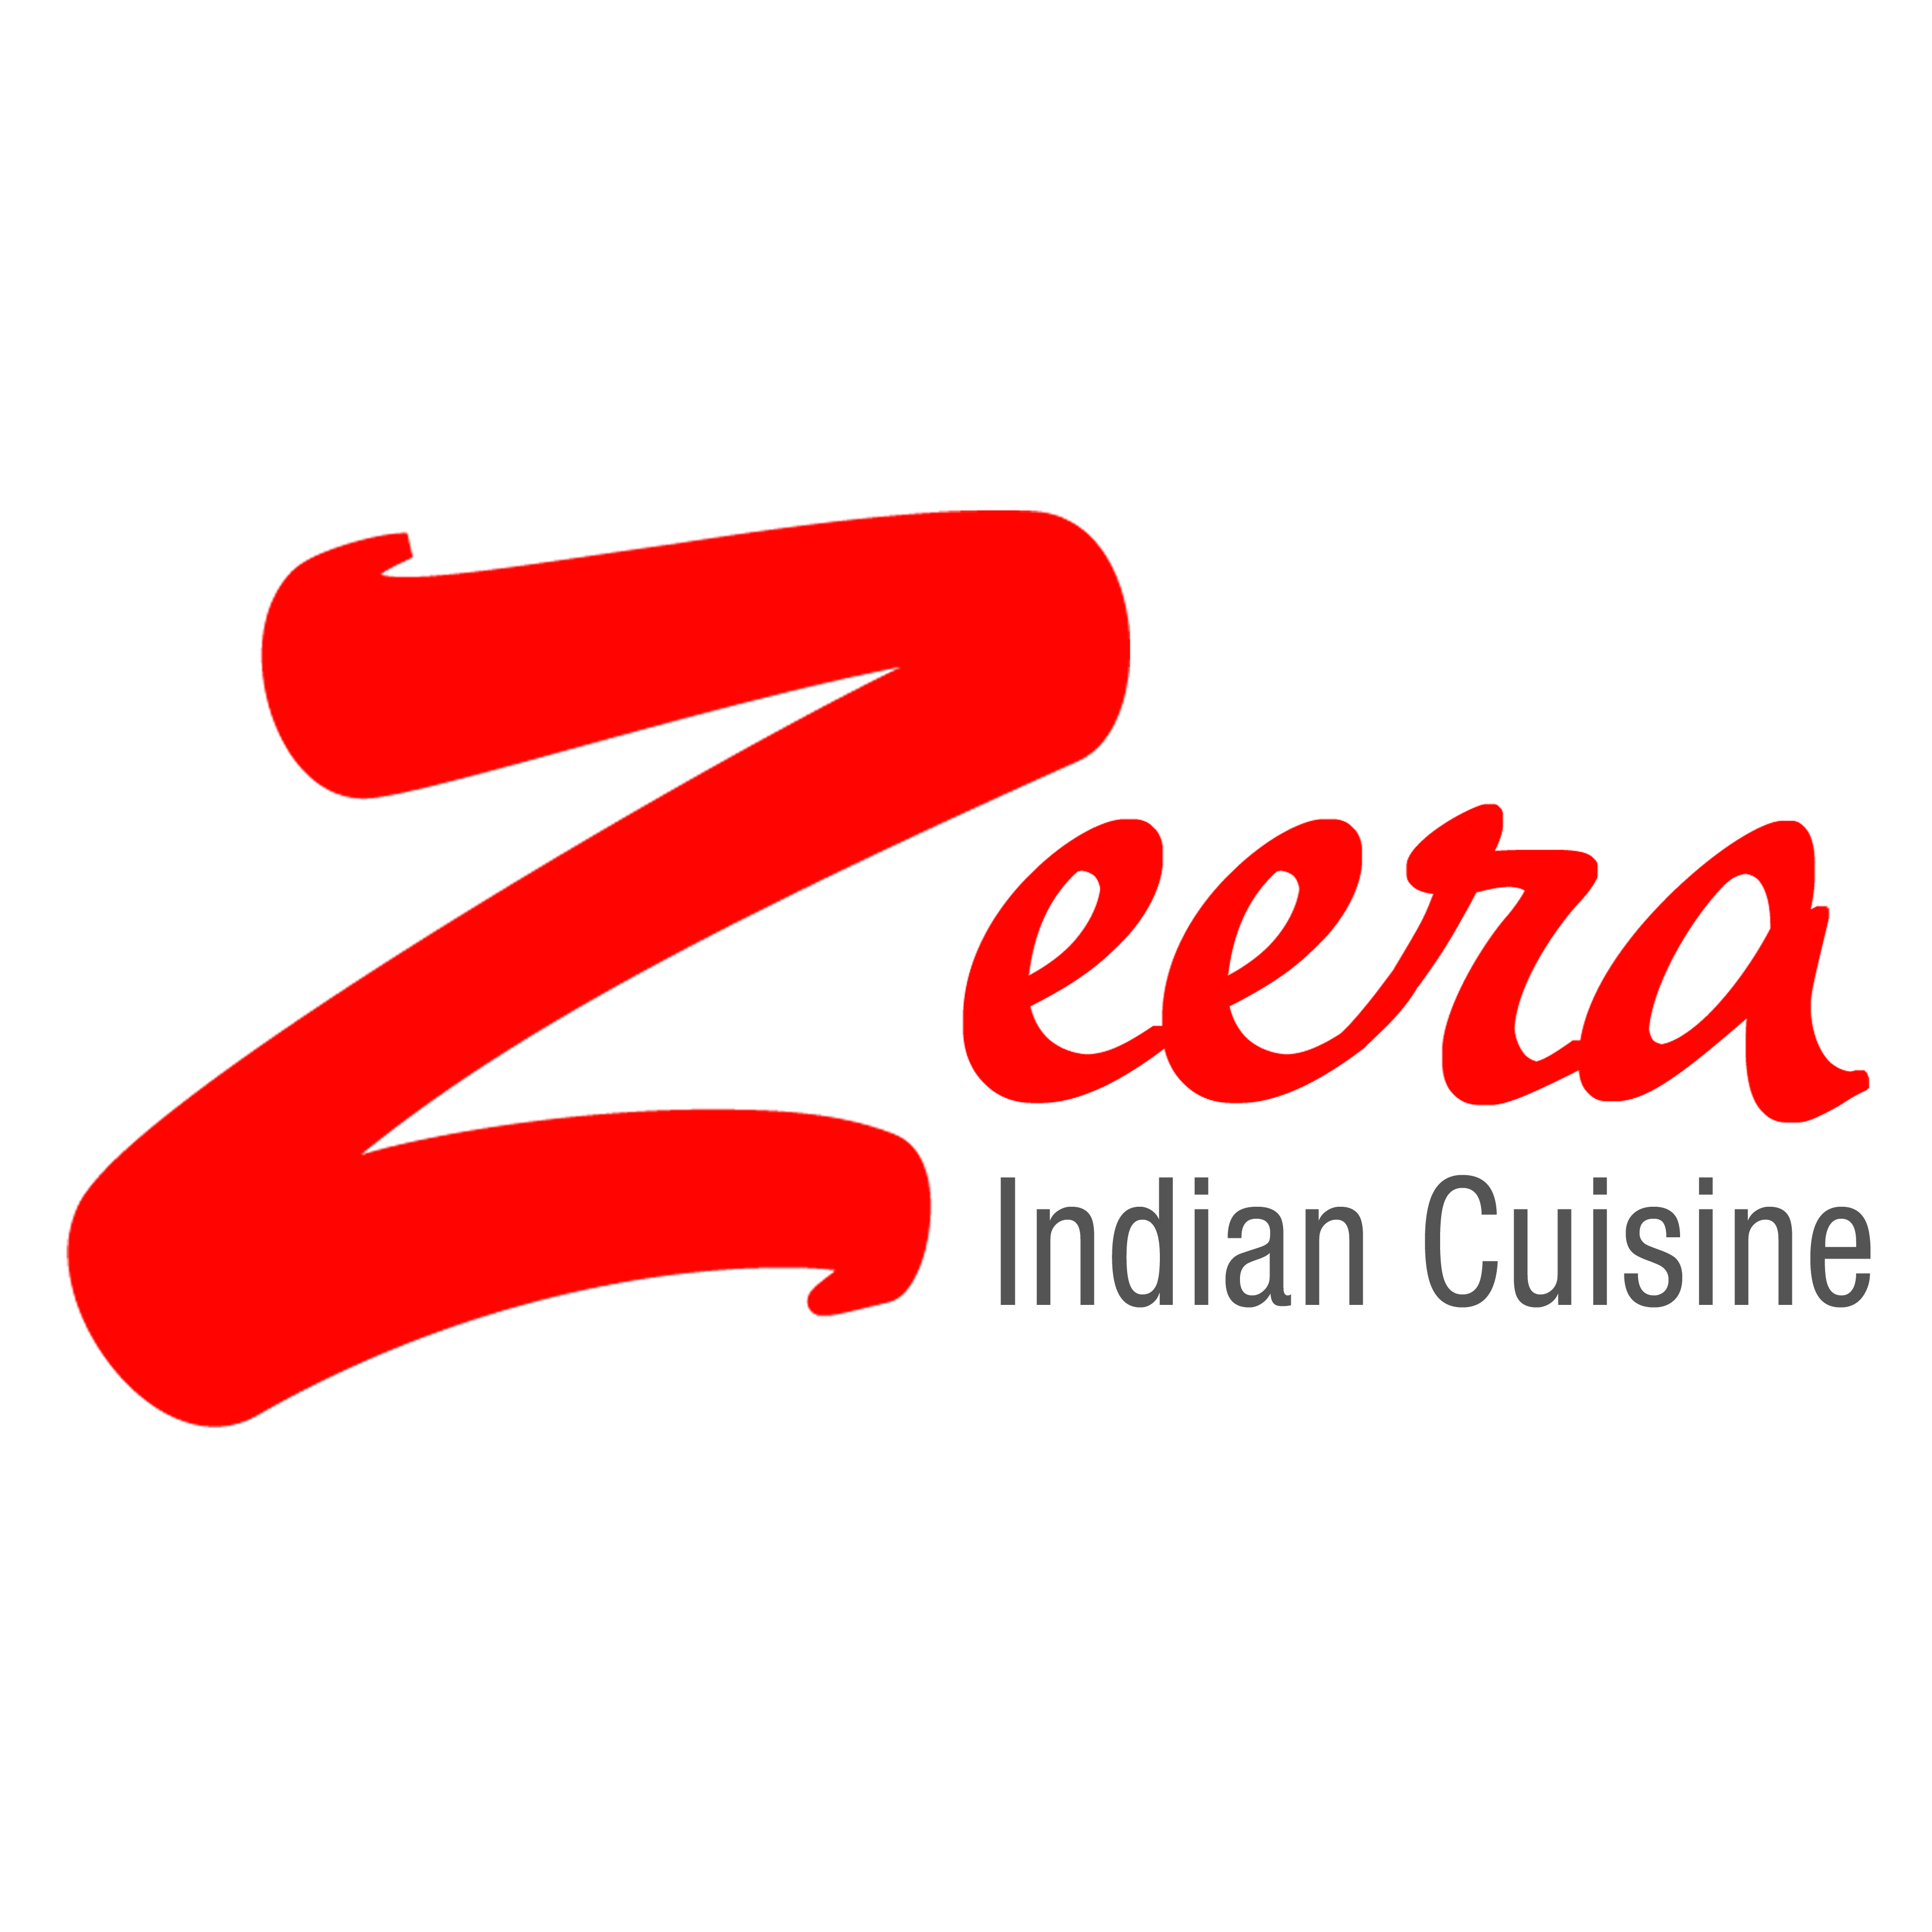 Logo for Zeera Indian Cuisine